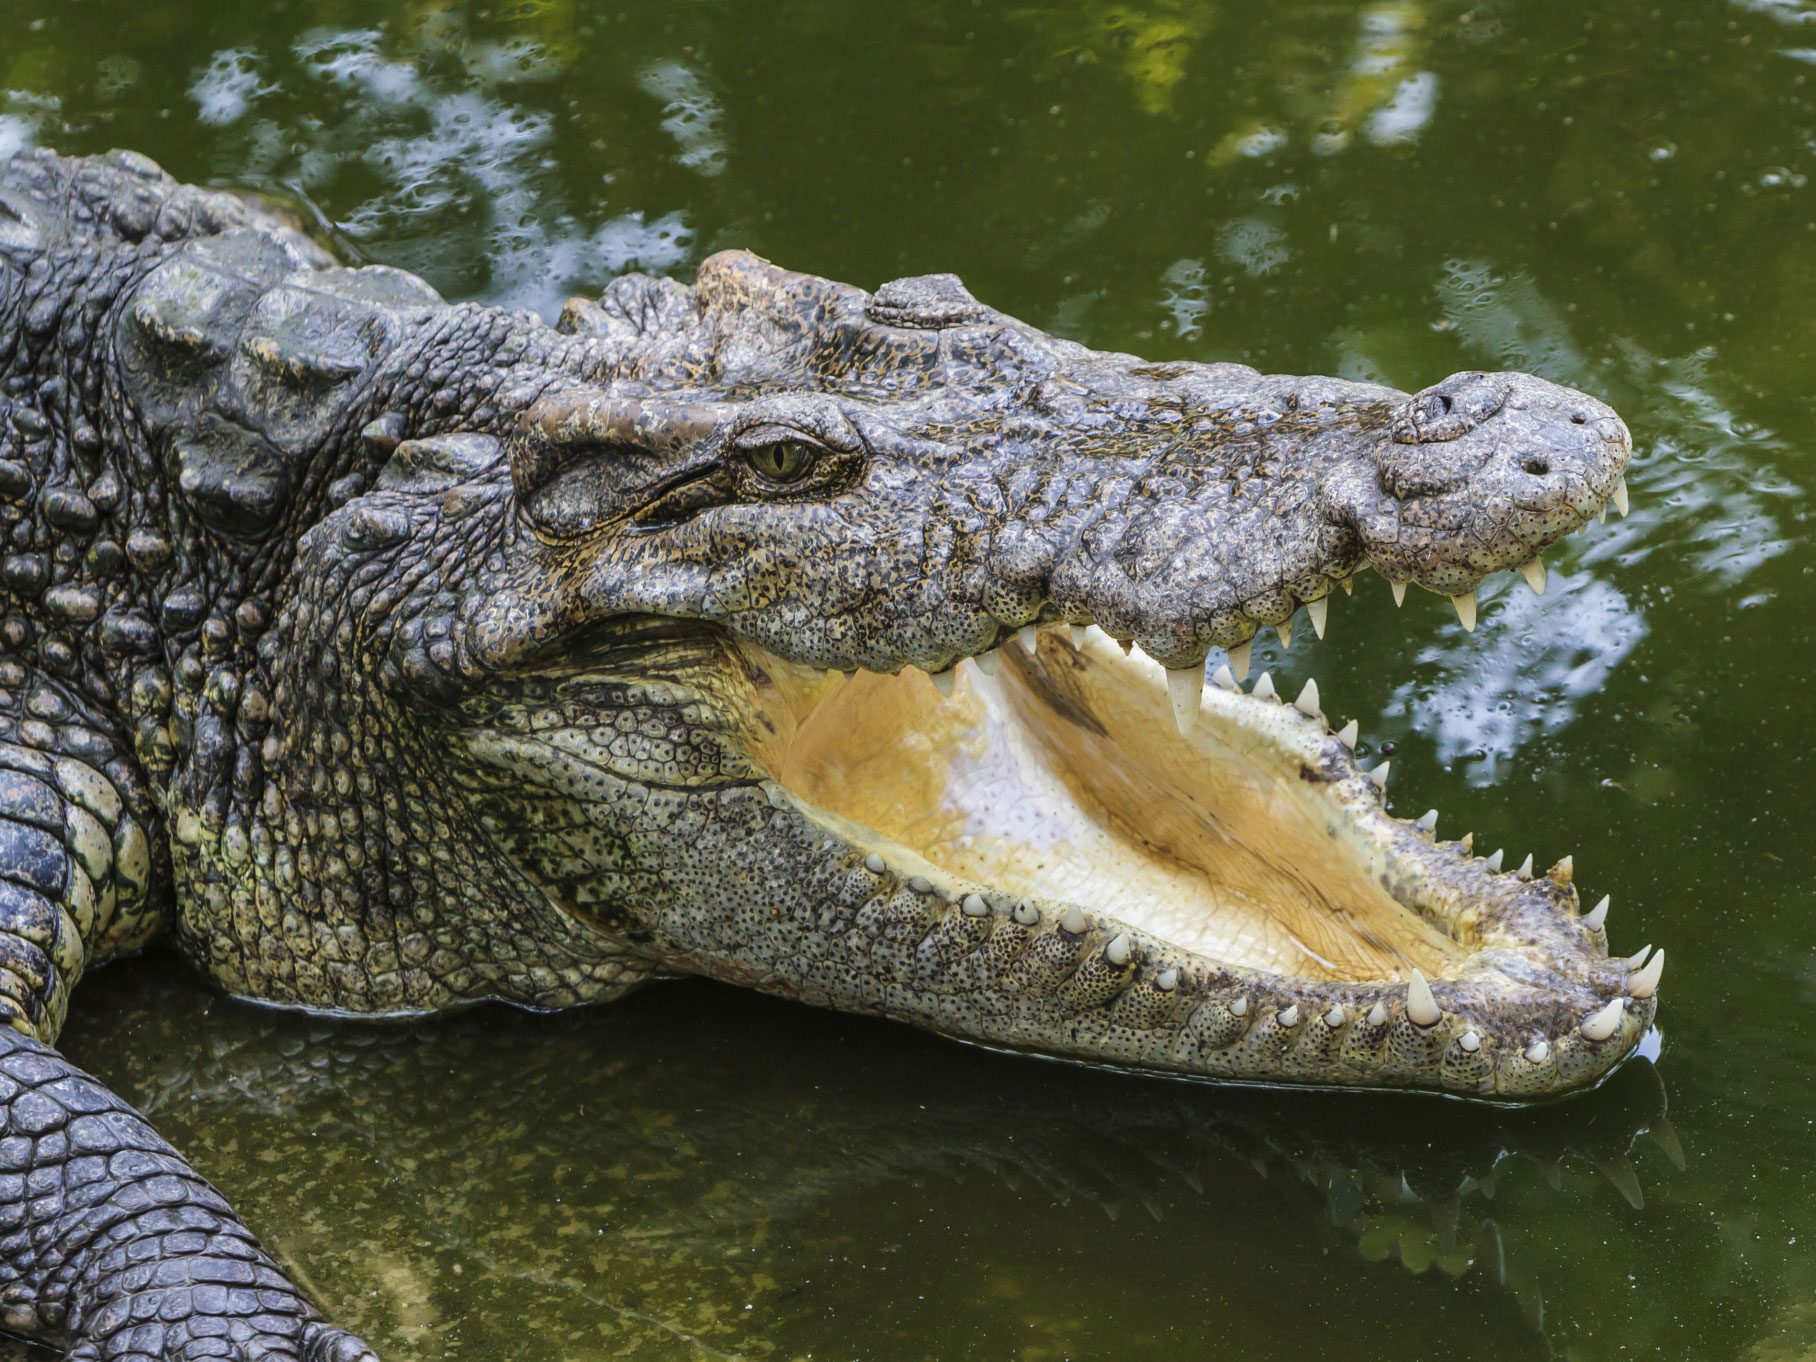 Swimming With Deadly Crocodiles in Australia